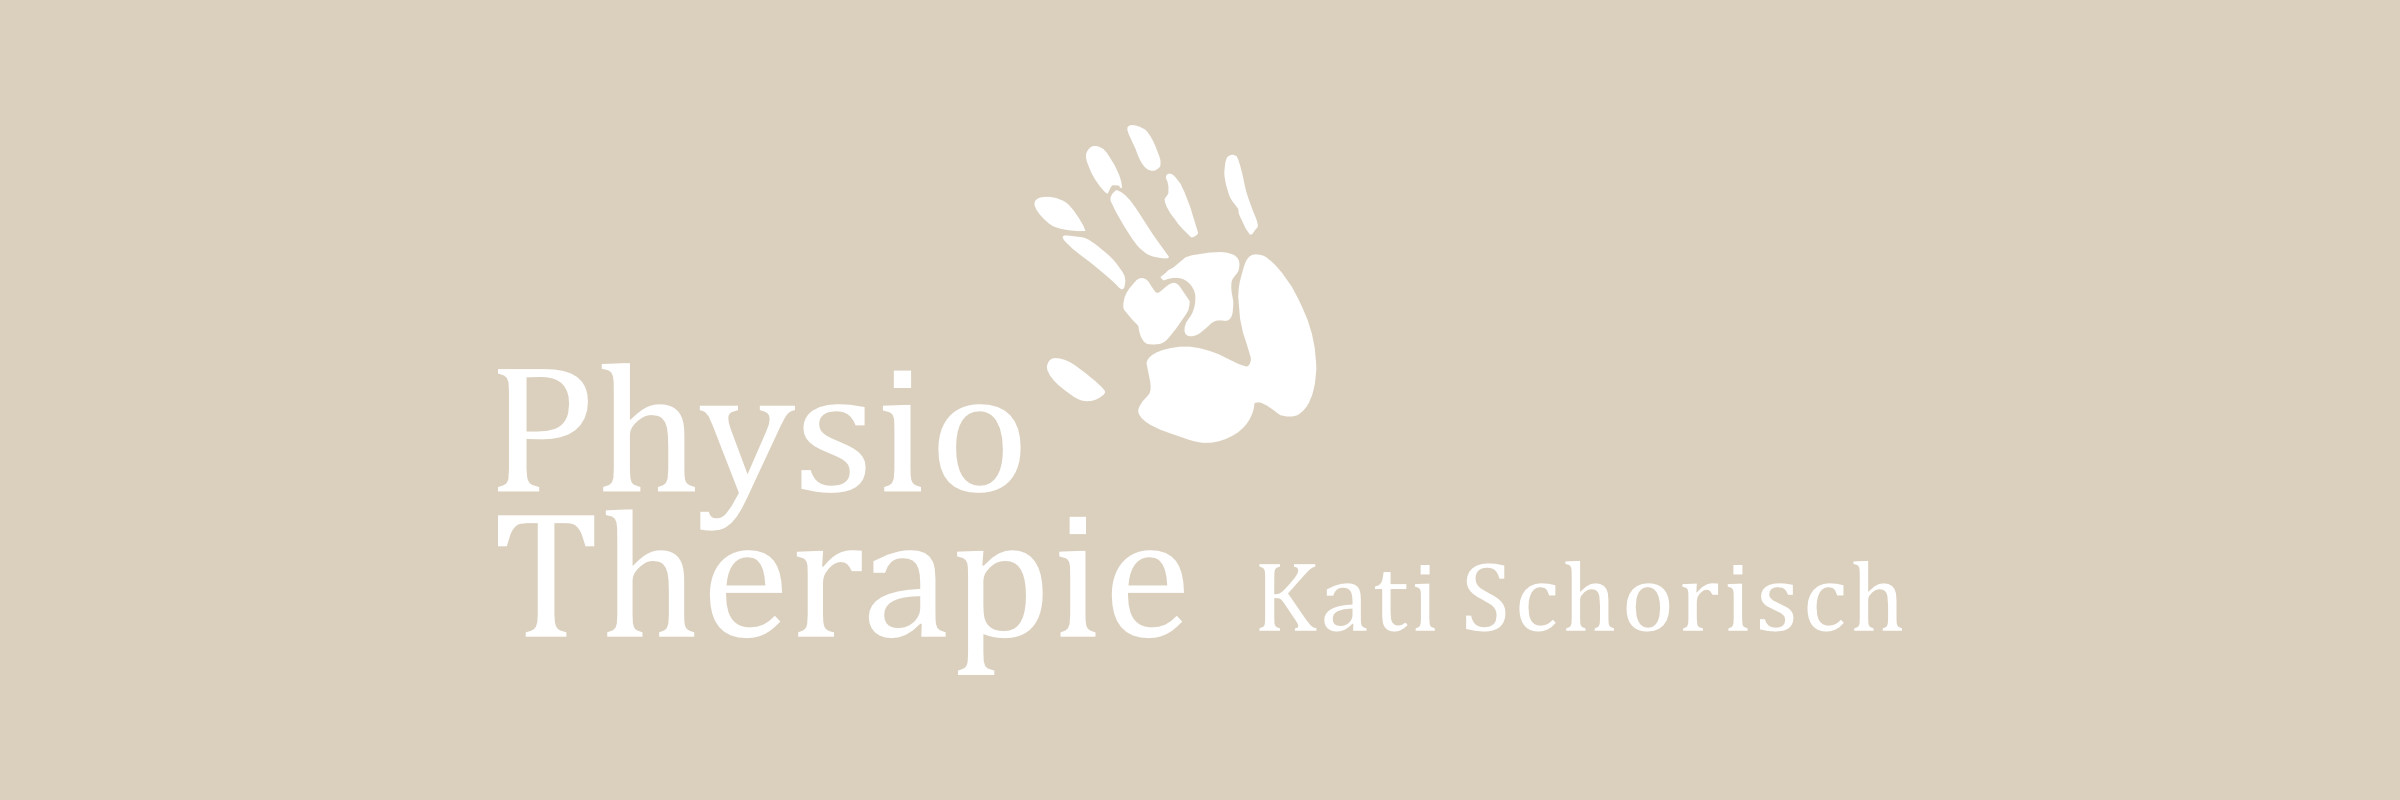 kiko kreativagentur - Projekt Physiotherapie Kati Schorisch